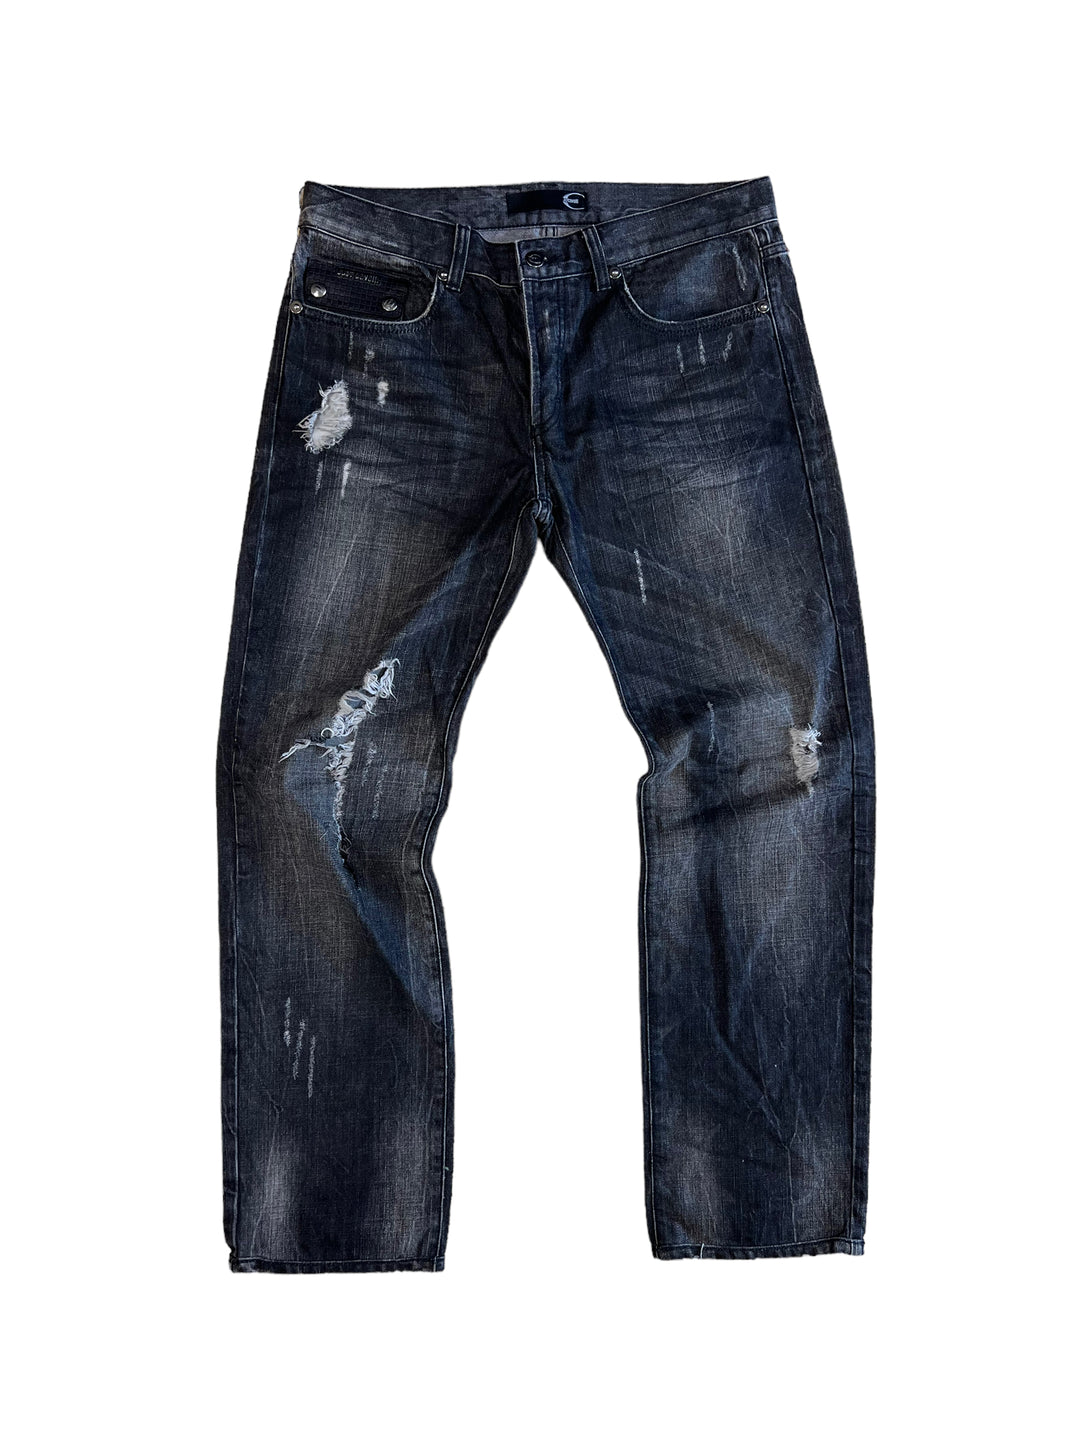 Just Cavalli Distressed Jeans Men’s Large